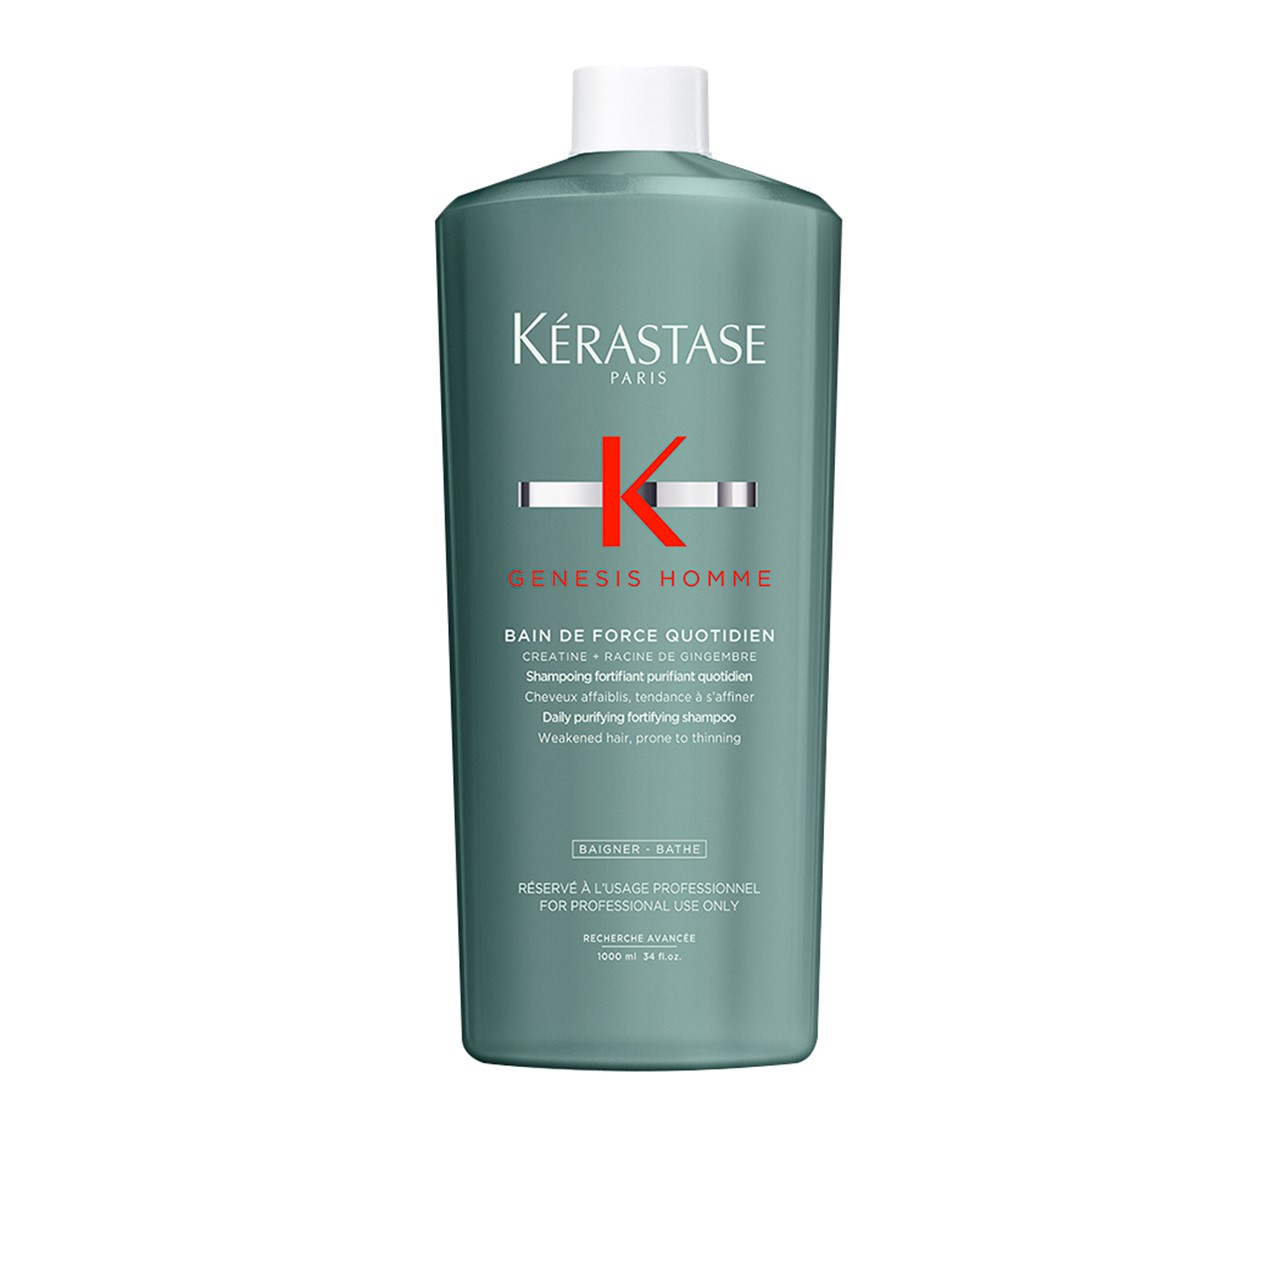 Kérastase Genesis Homme Daily Purifying Fortifying Shampoo 1L (34 fl oz)